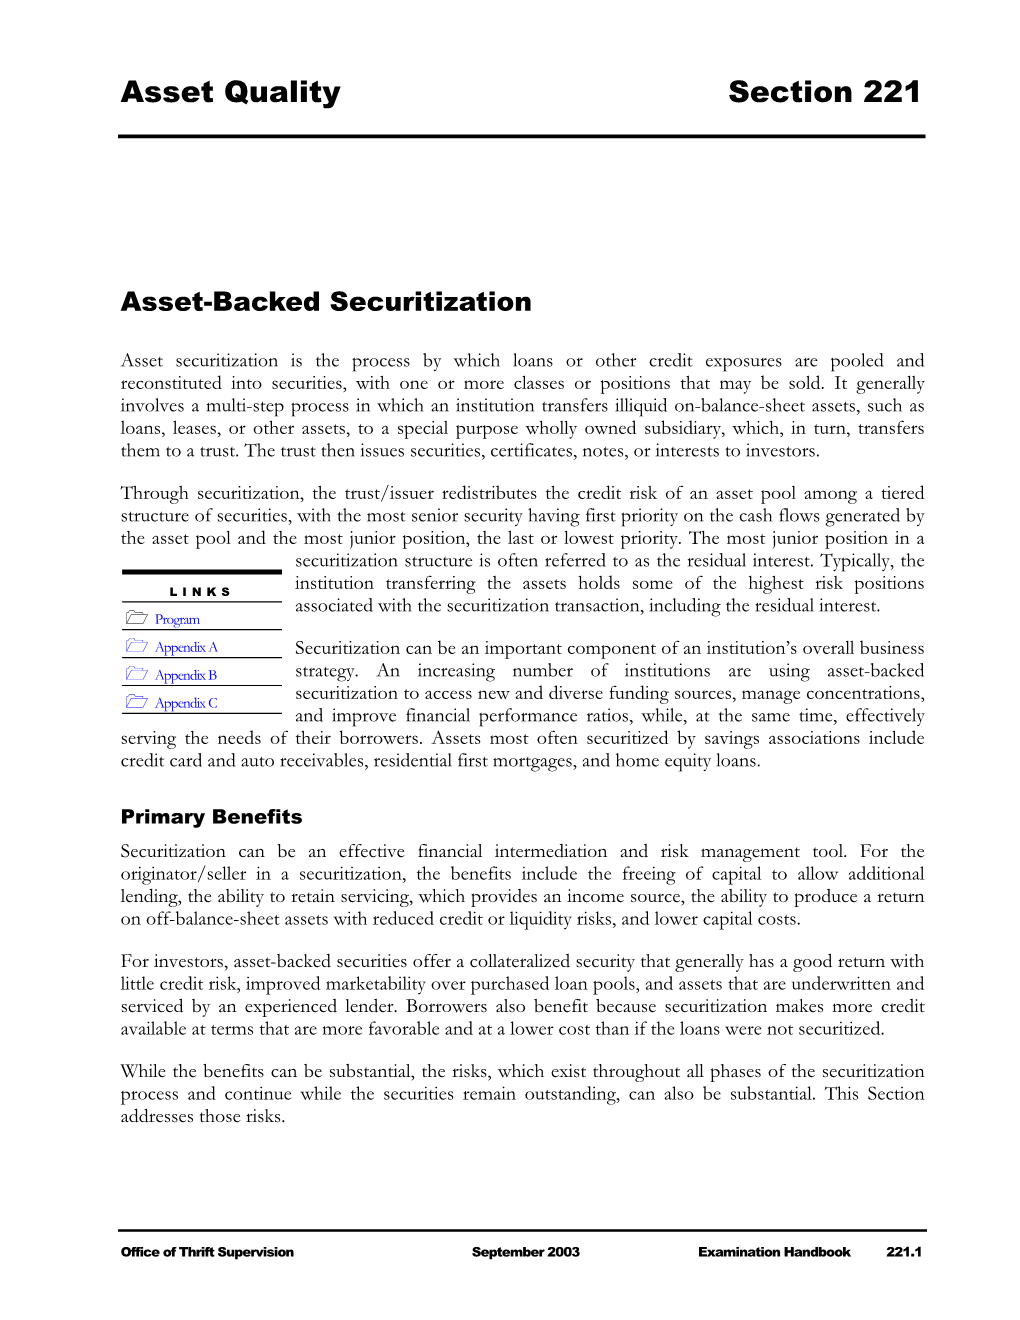 Examination Handbook 221, Asset-Backed Securitization, September 2003